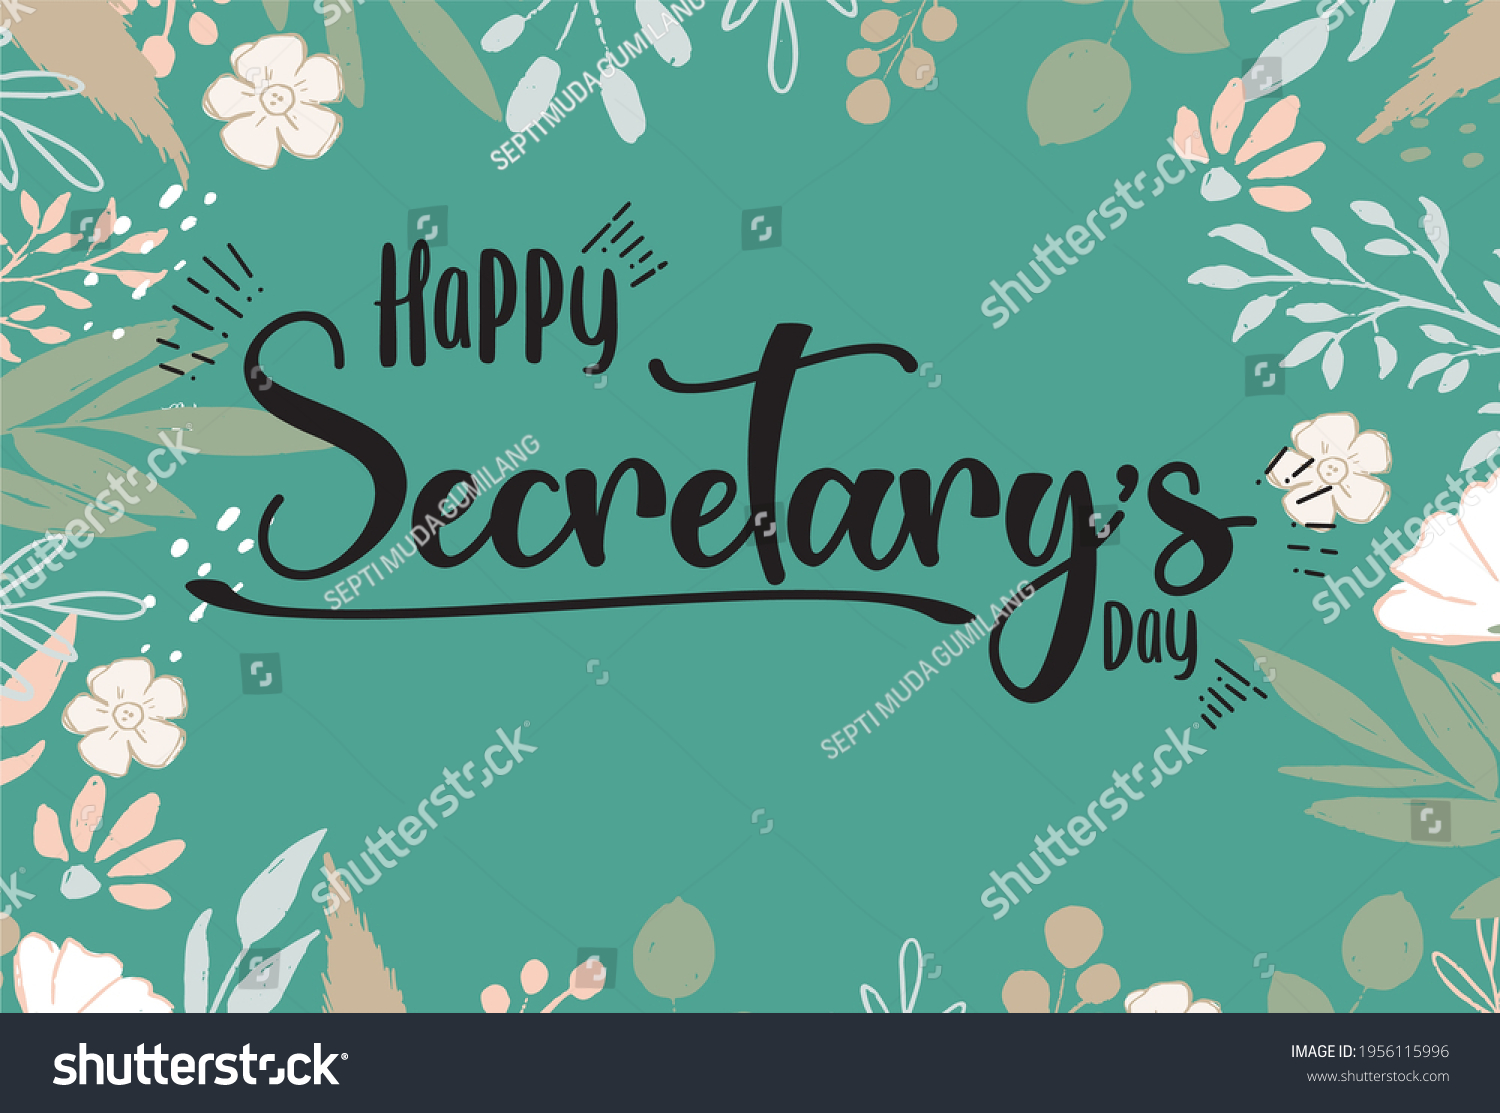 Happy Secretarys Professionals Day Secretaries Day Stock Vector